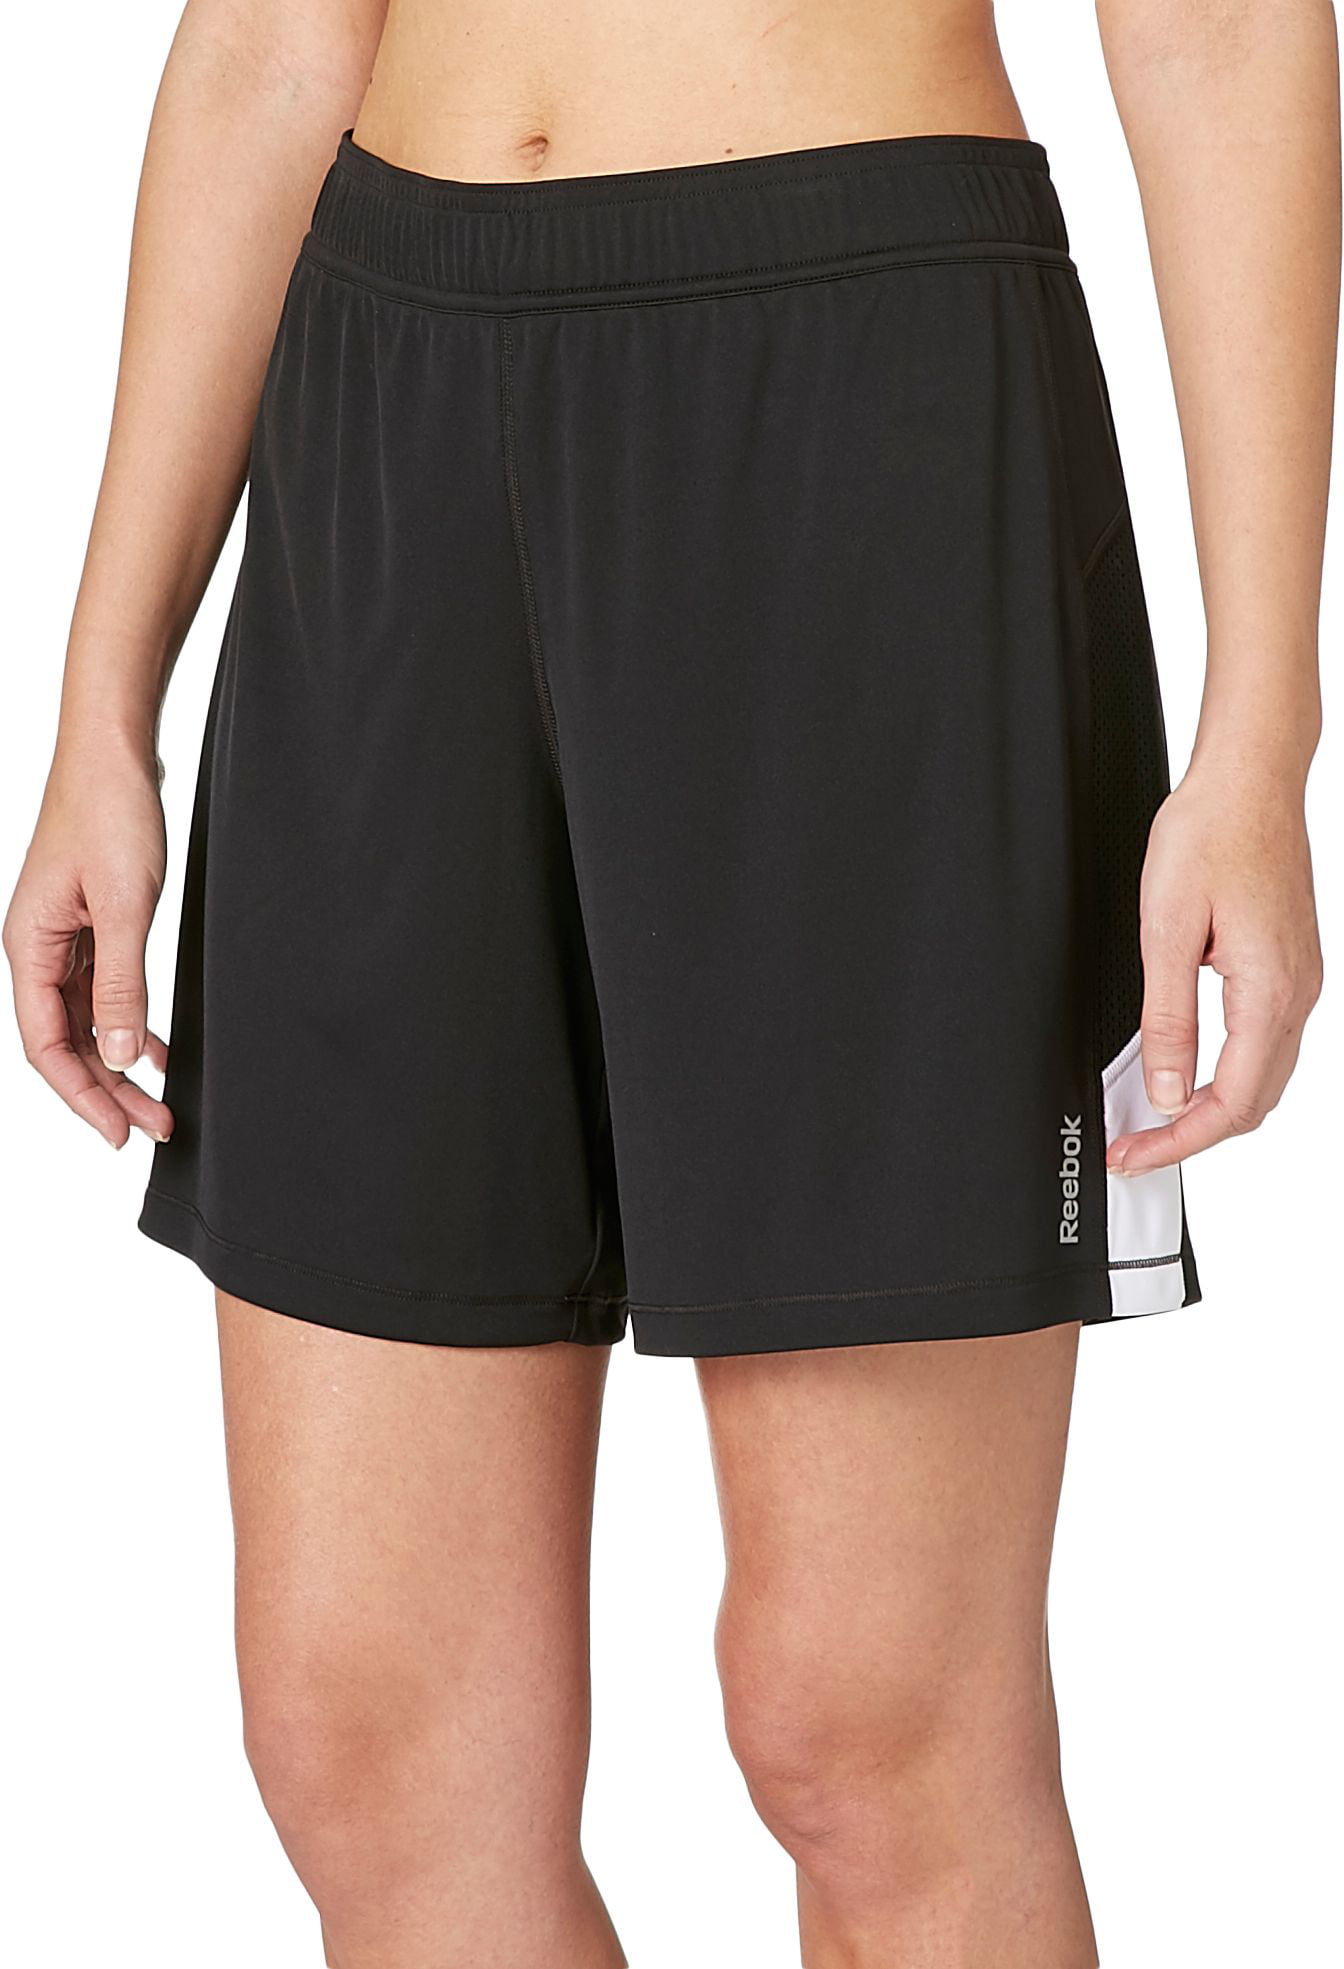 reebok women's 7 inch training shorts